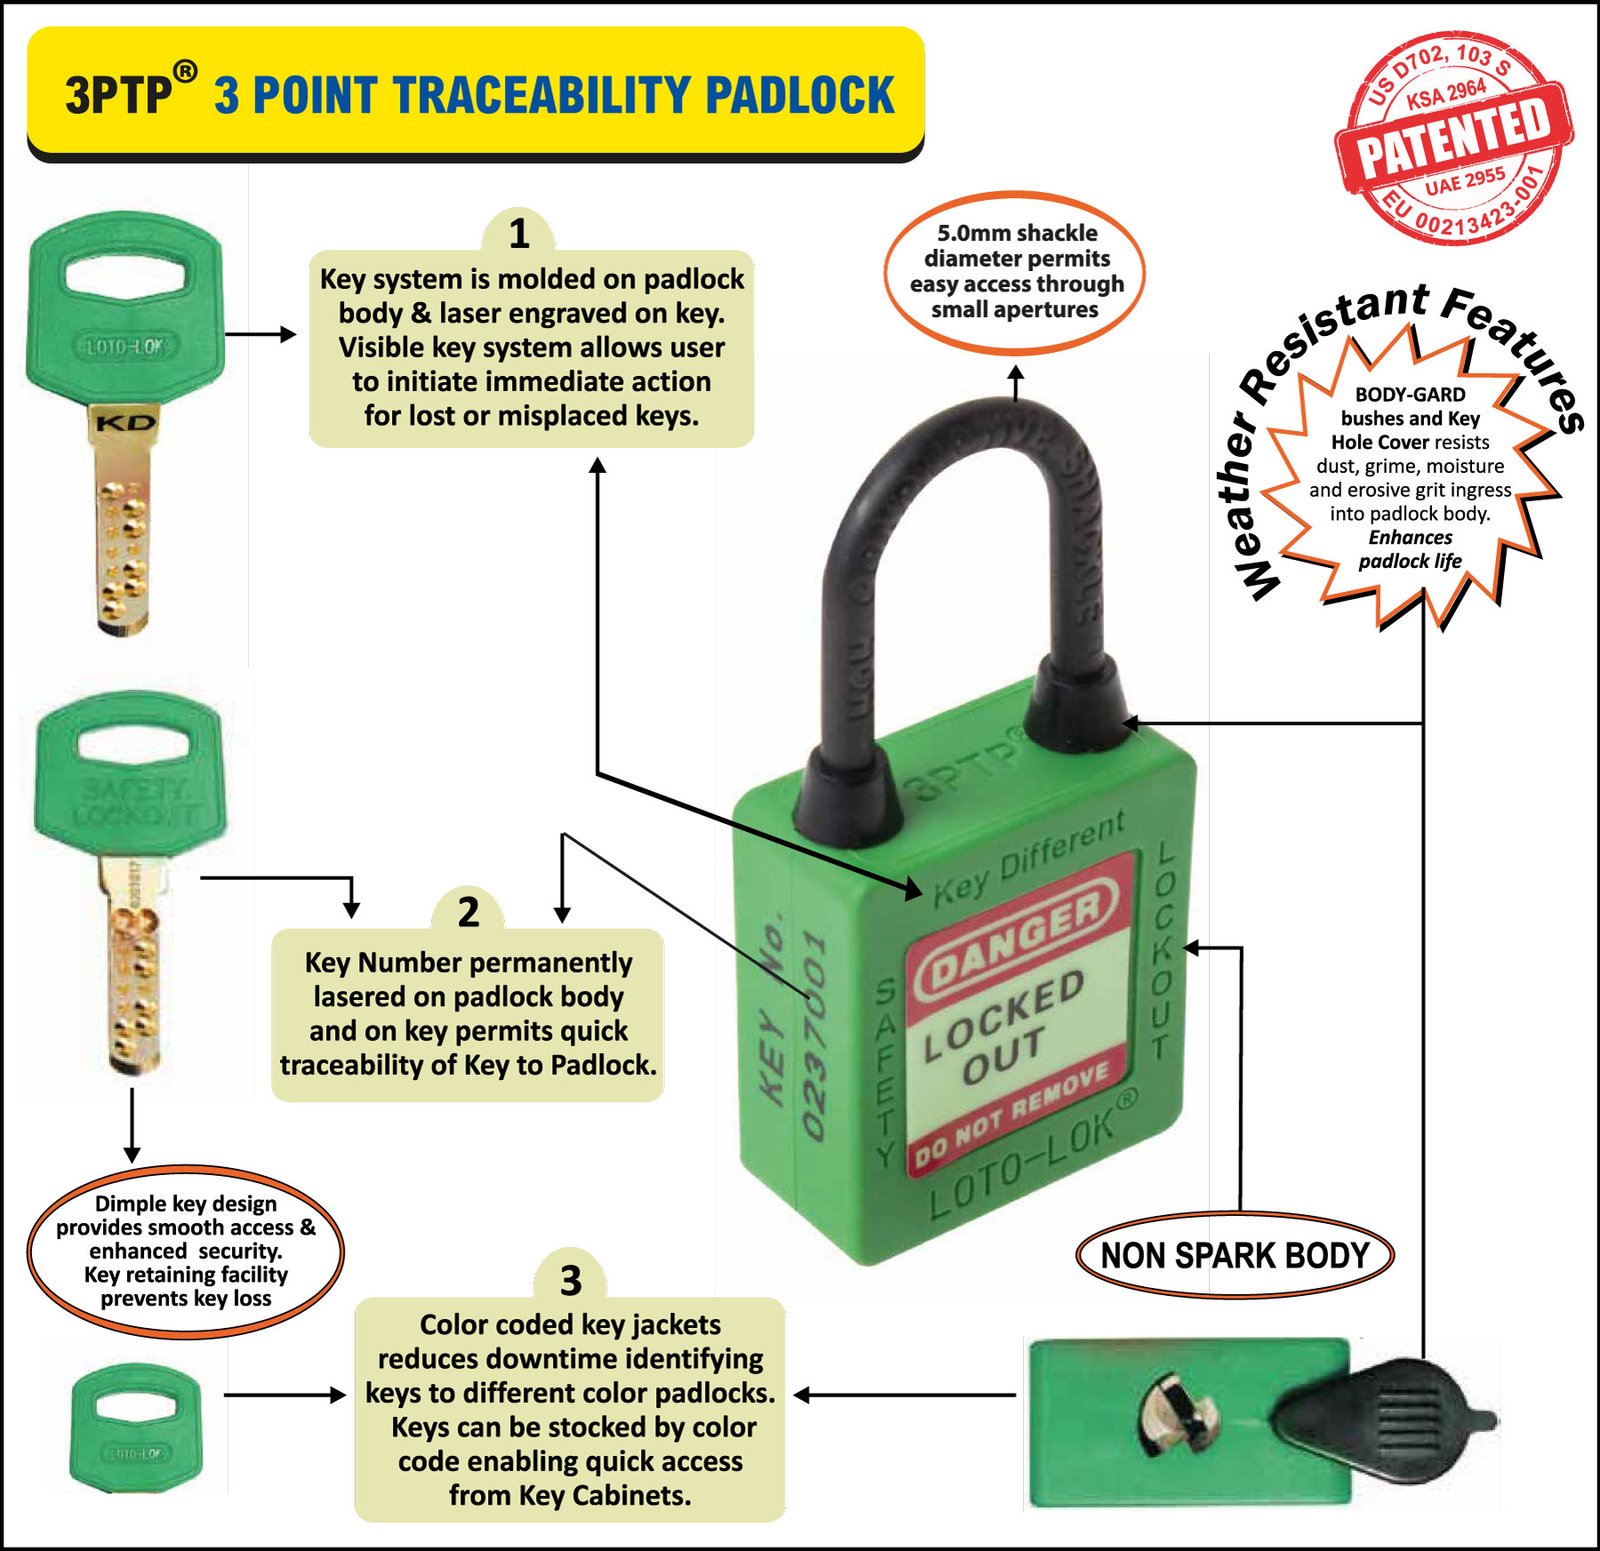 3PTP - 3 Point Traceability Padlock